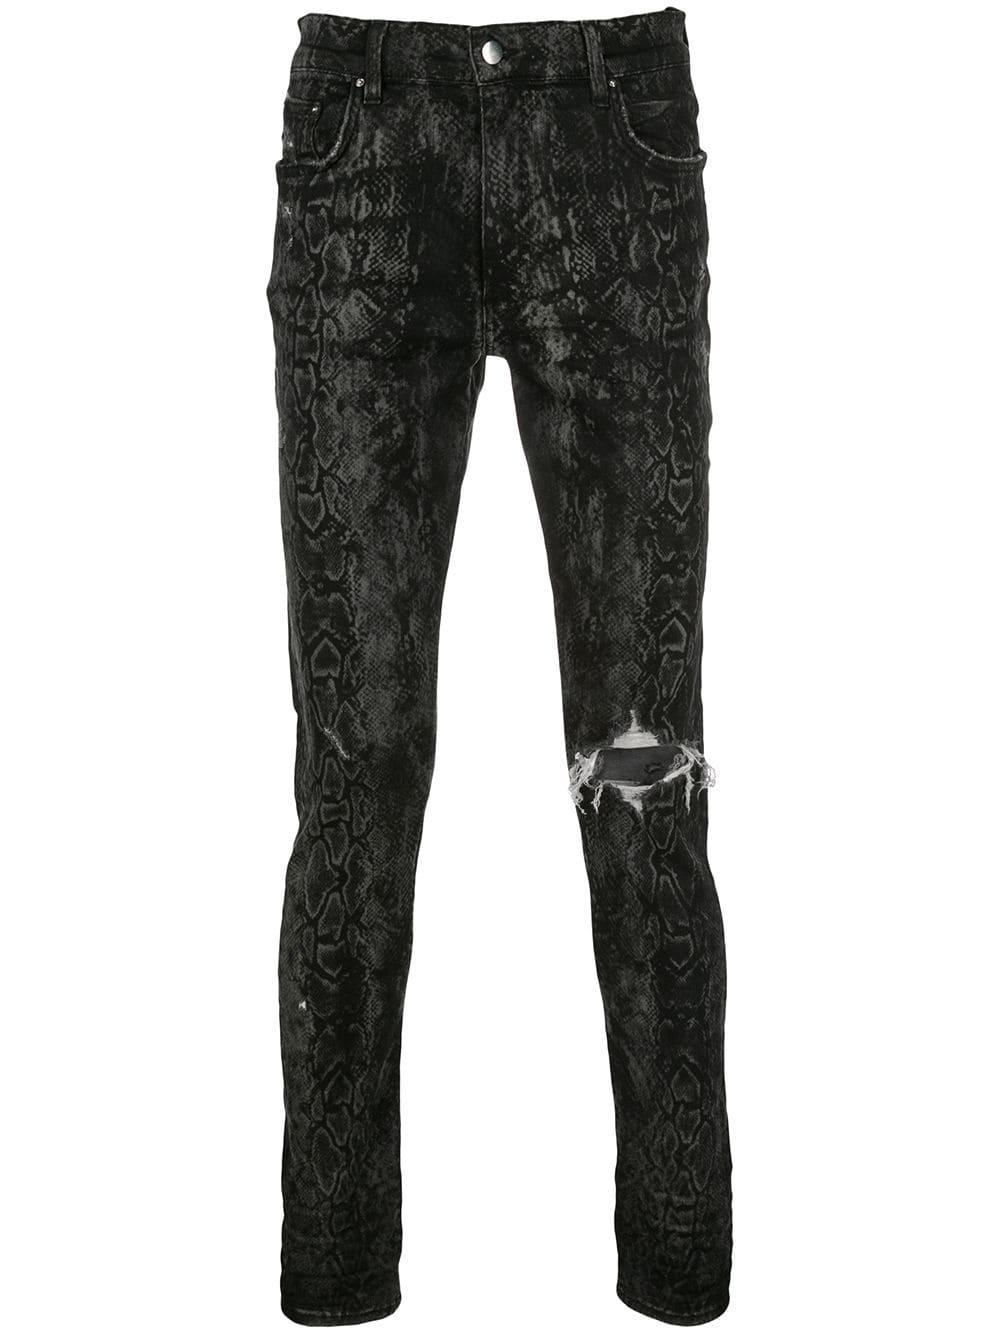 Amiri Python Print Skinny Jeans in Black for Men - Lyst